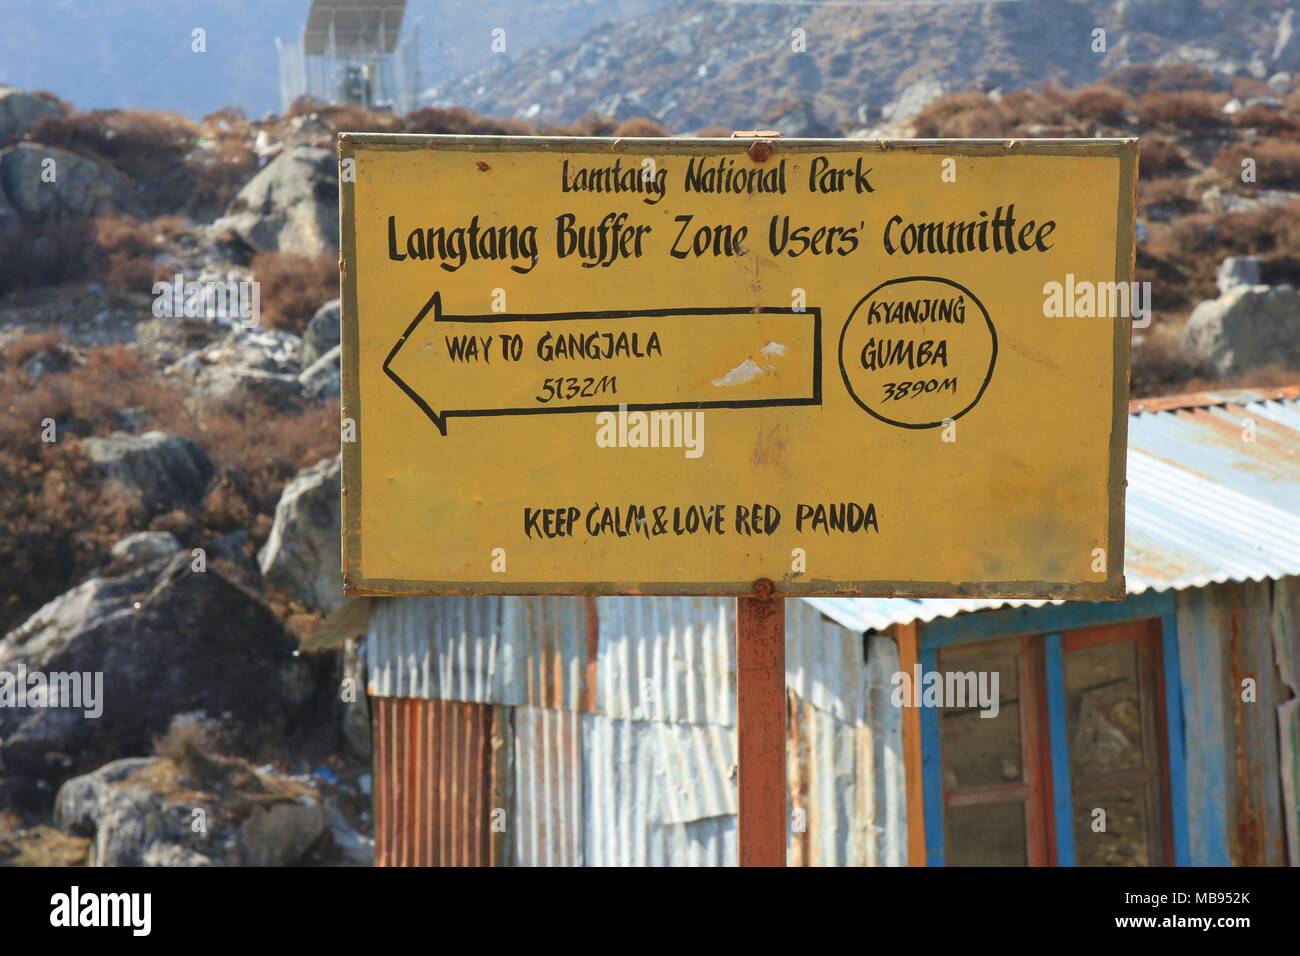 Divertente segno direzionale in Kyangjing Gumba, Langtang National Park, Nepal. Foto Stock